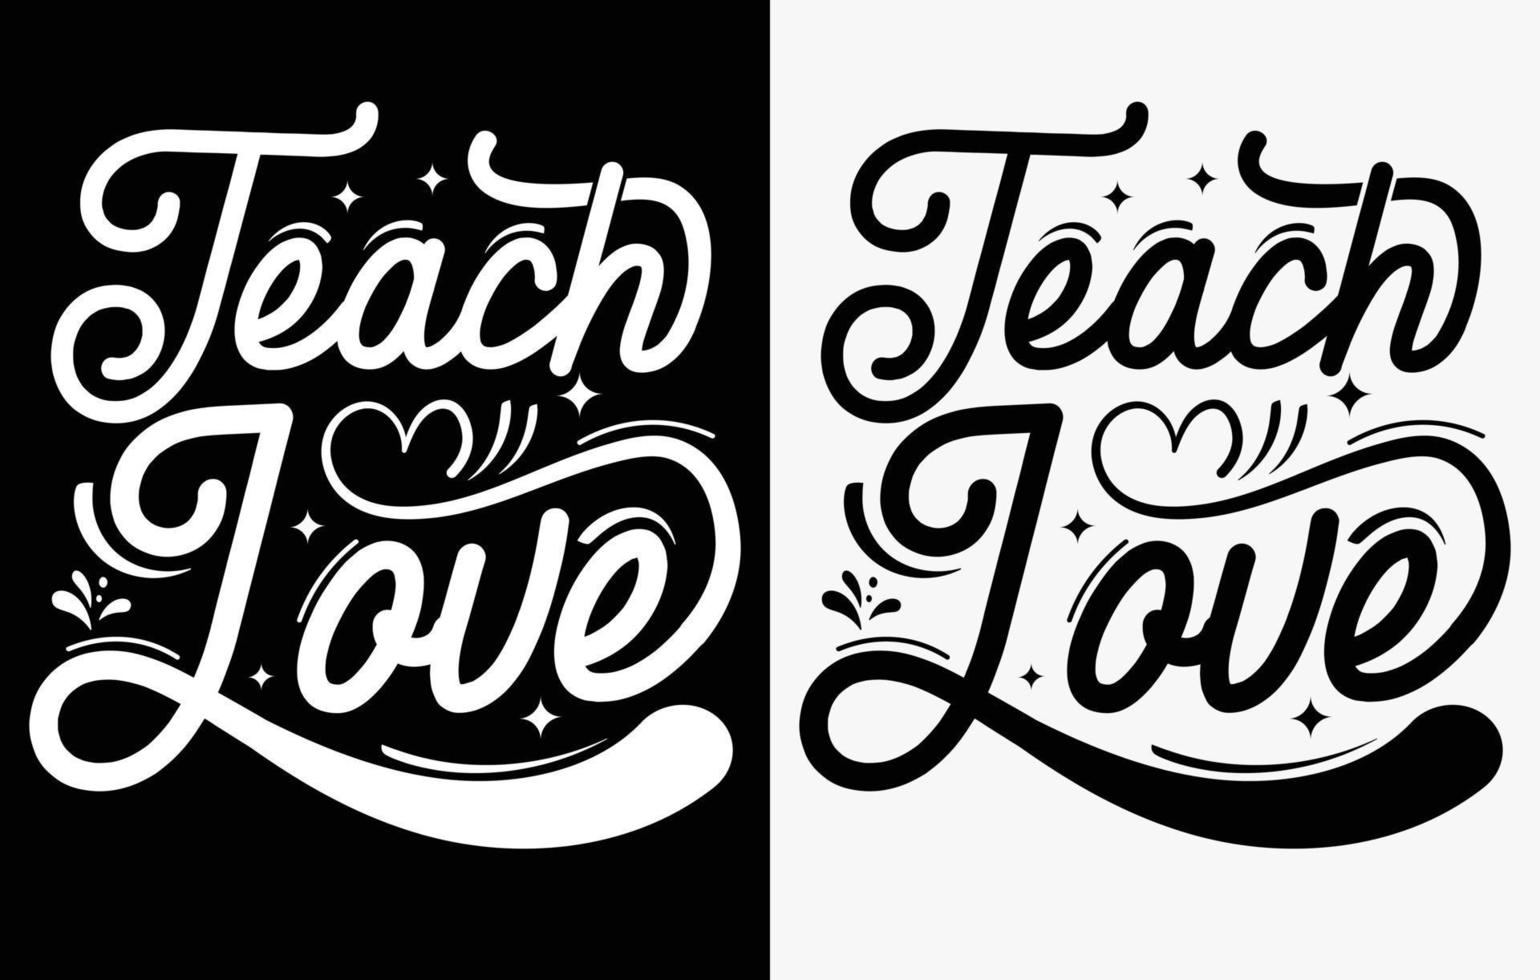 Motivational typography creative t shirt designs, lettering t shirt design vector